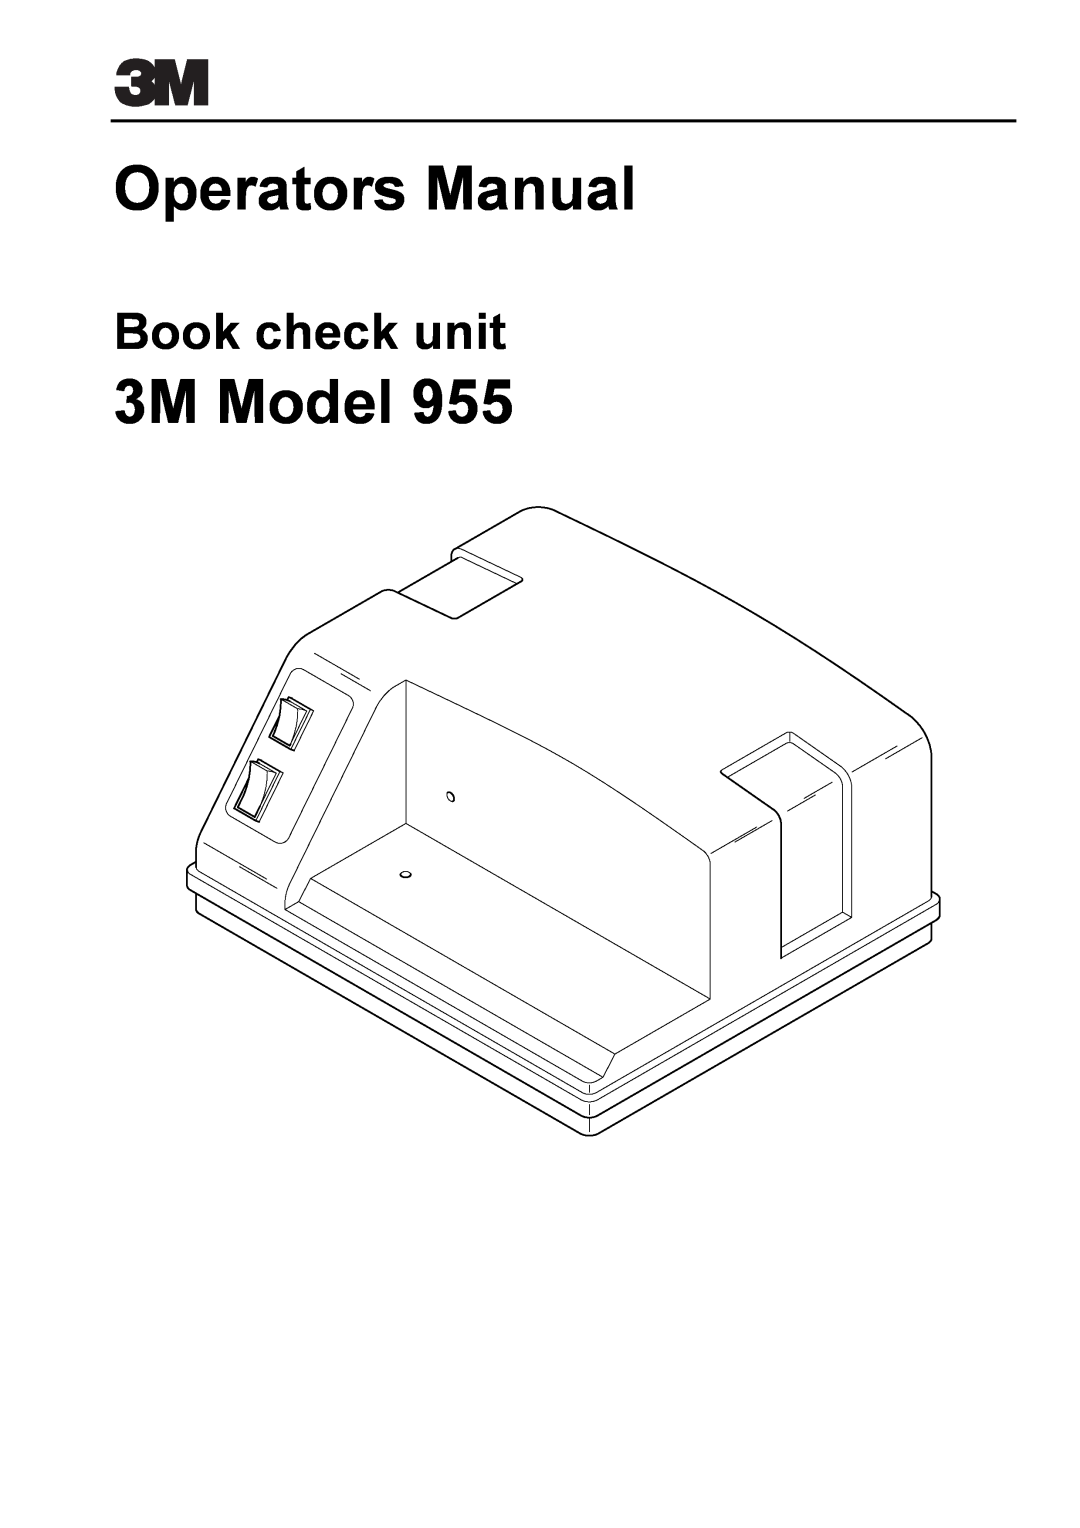 3M 955 manual Operators Manual, 3M Model, Book check unit 